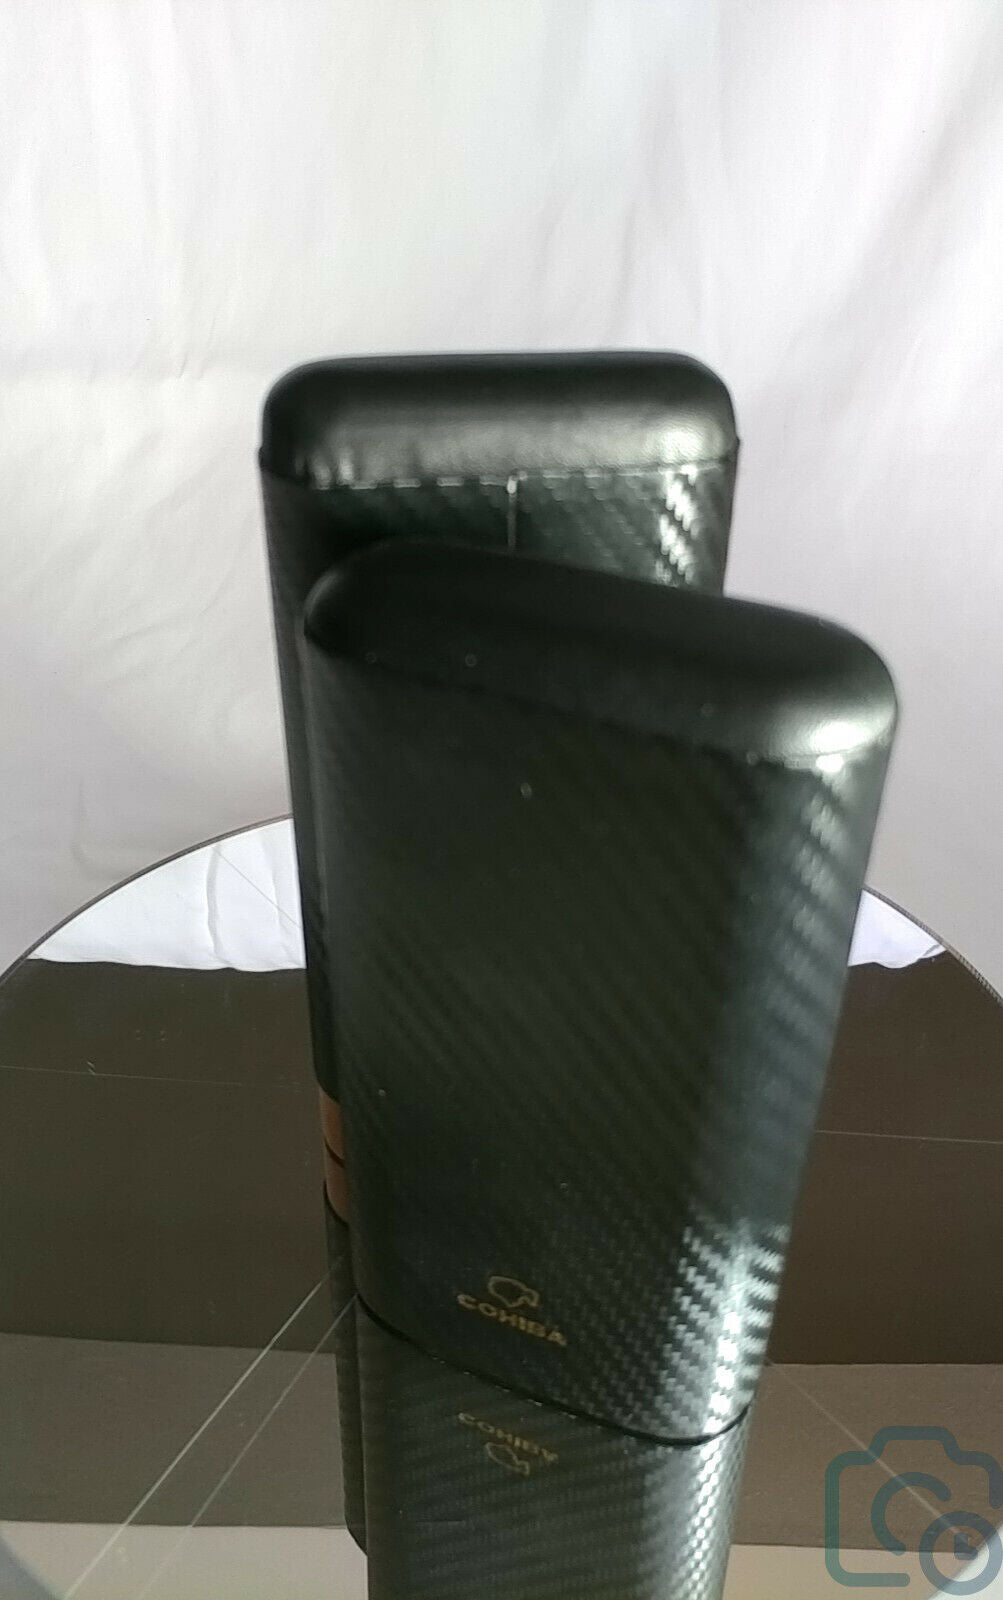 Wood Portable Black Carbon Fiber Cigar Case Outdoor 3 Tubes Travel Humidor